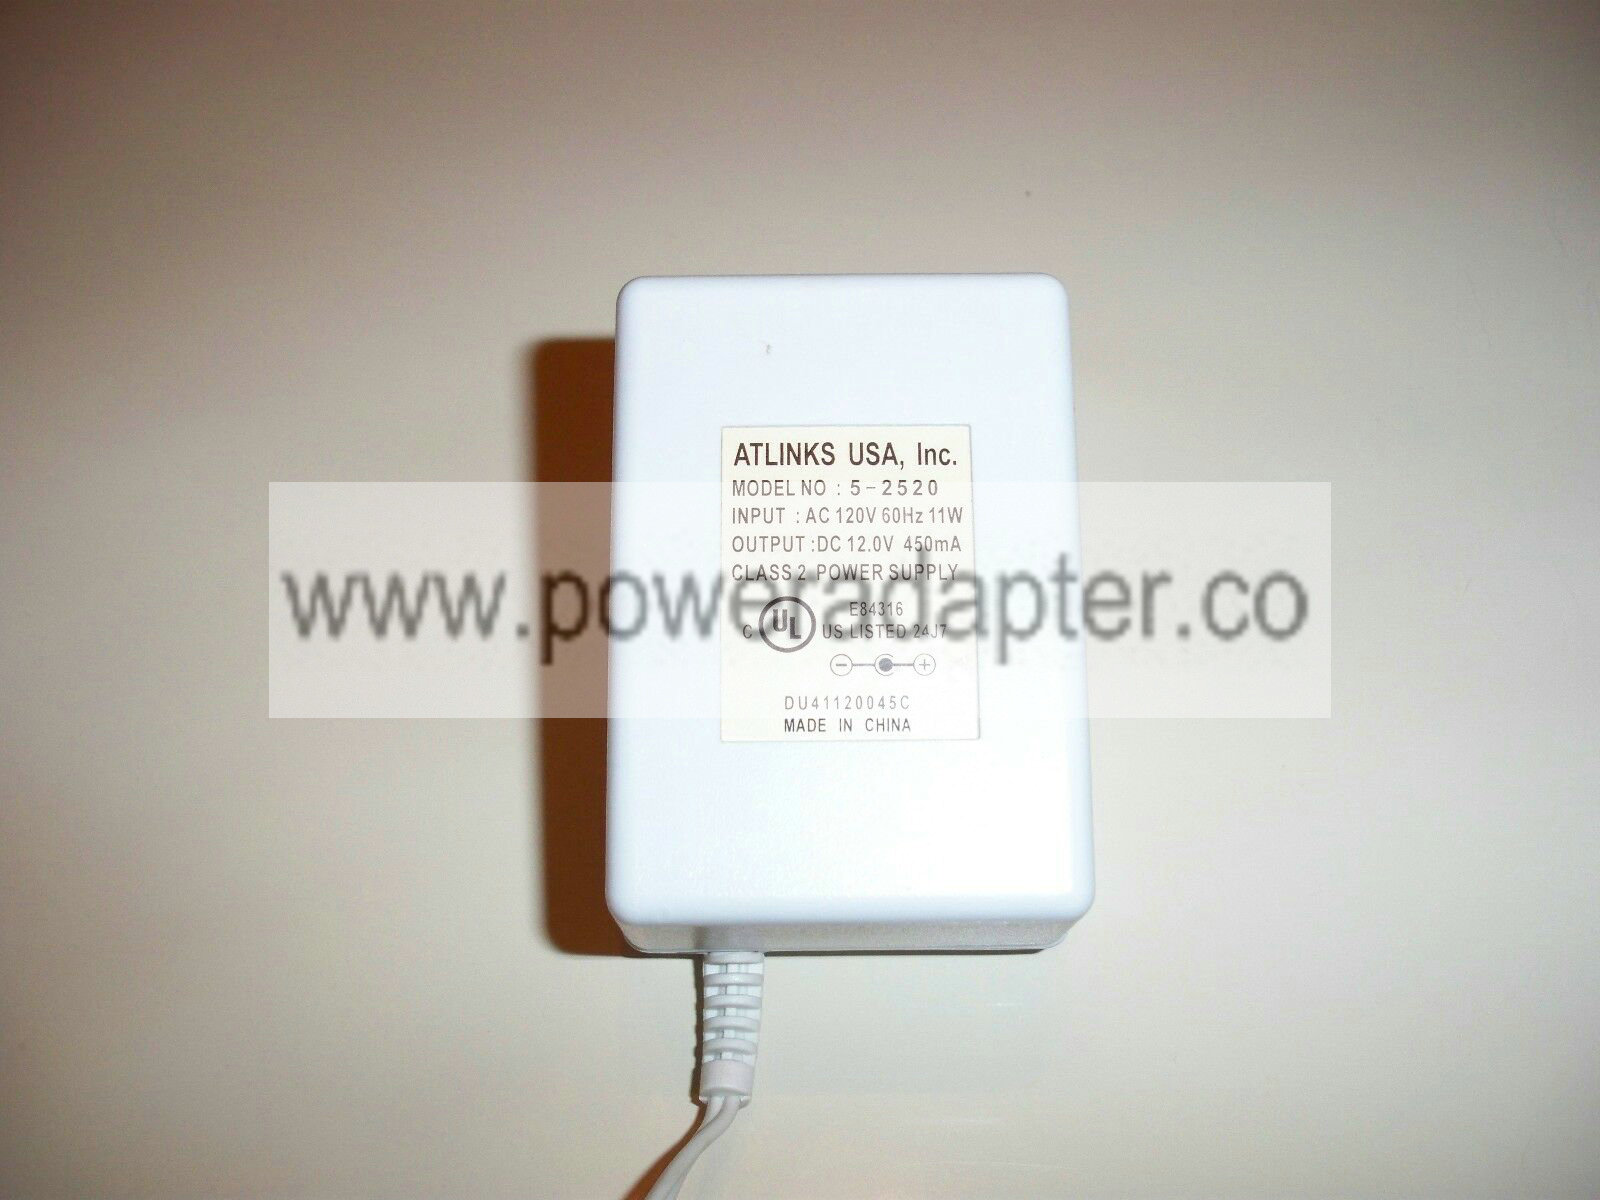 Atlinks Power Adapter Model 5-2520 12V DC 450mA Brand: ATLINKS USA, Inc. MPN: 5-2520 Model: 5-2520 Output Voltage: - Click Image to Close